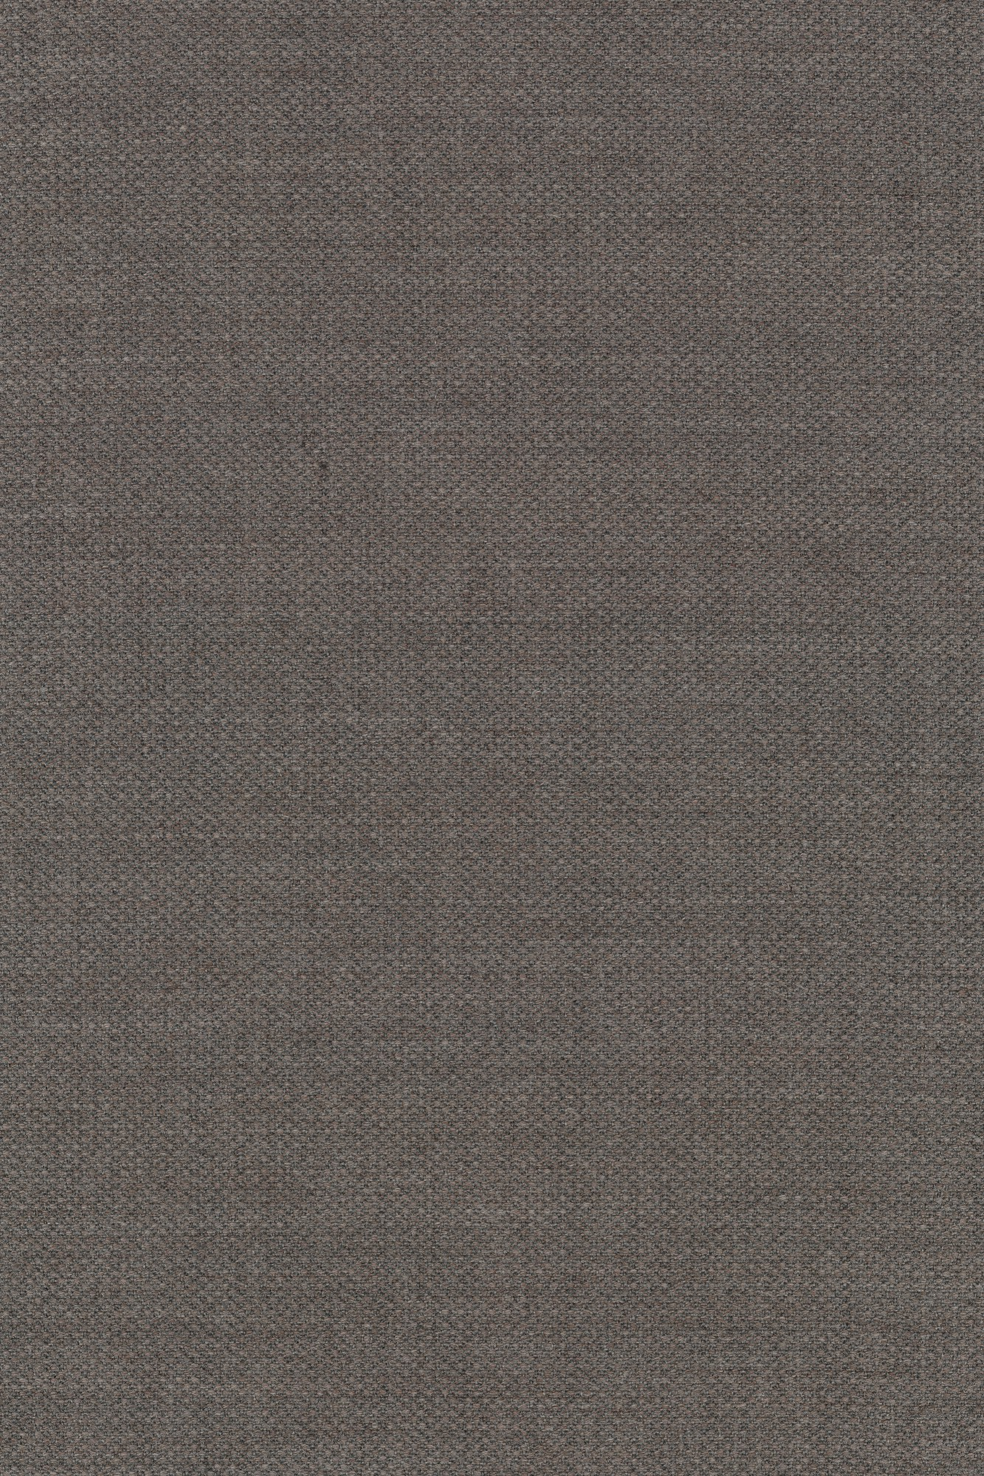 Fabric sample Fiord 351 grey